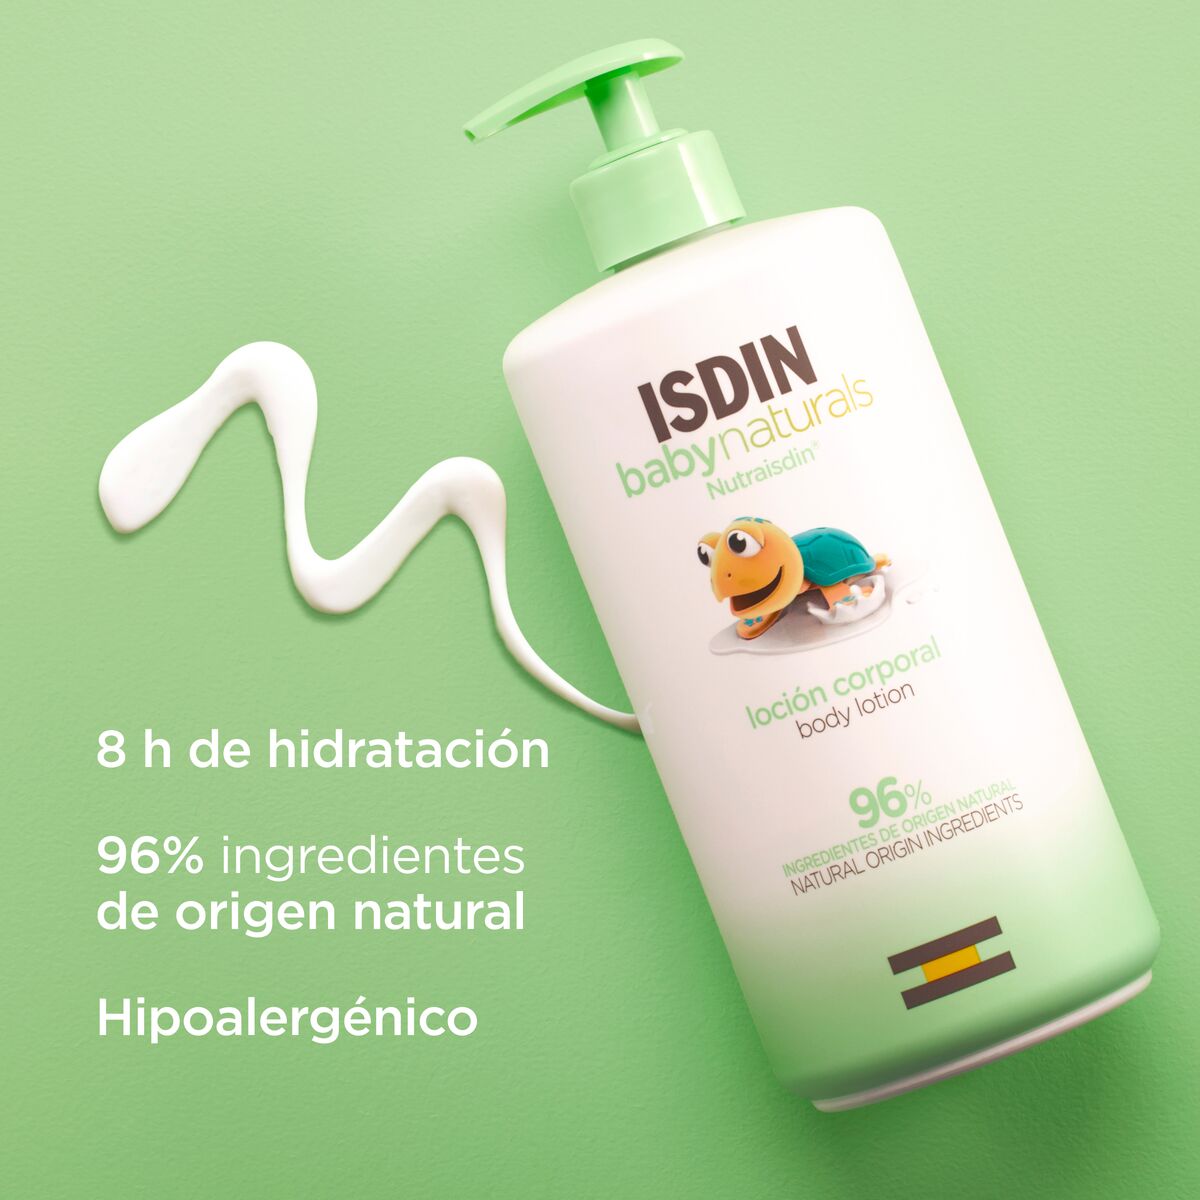 Buy ISDIN Baby Naturals Body Lotion 400ml · USA (Español)